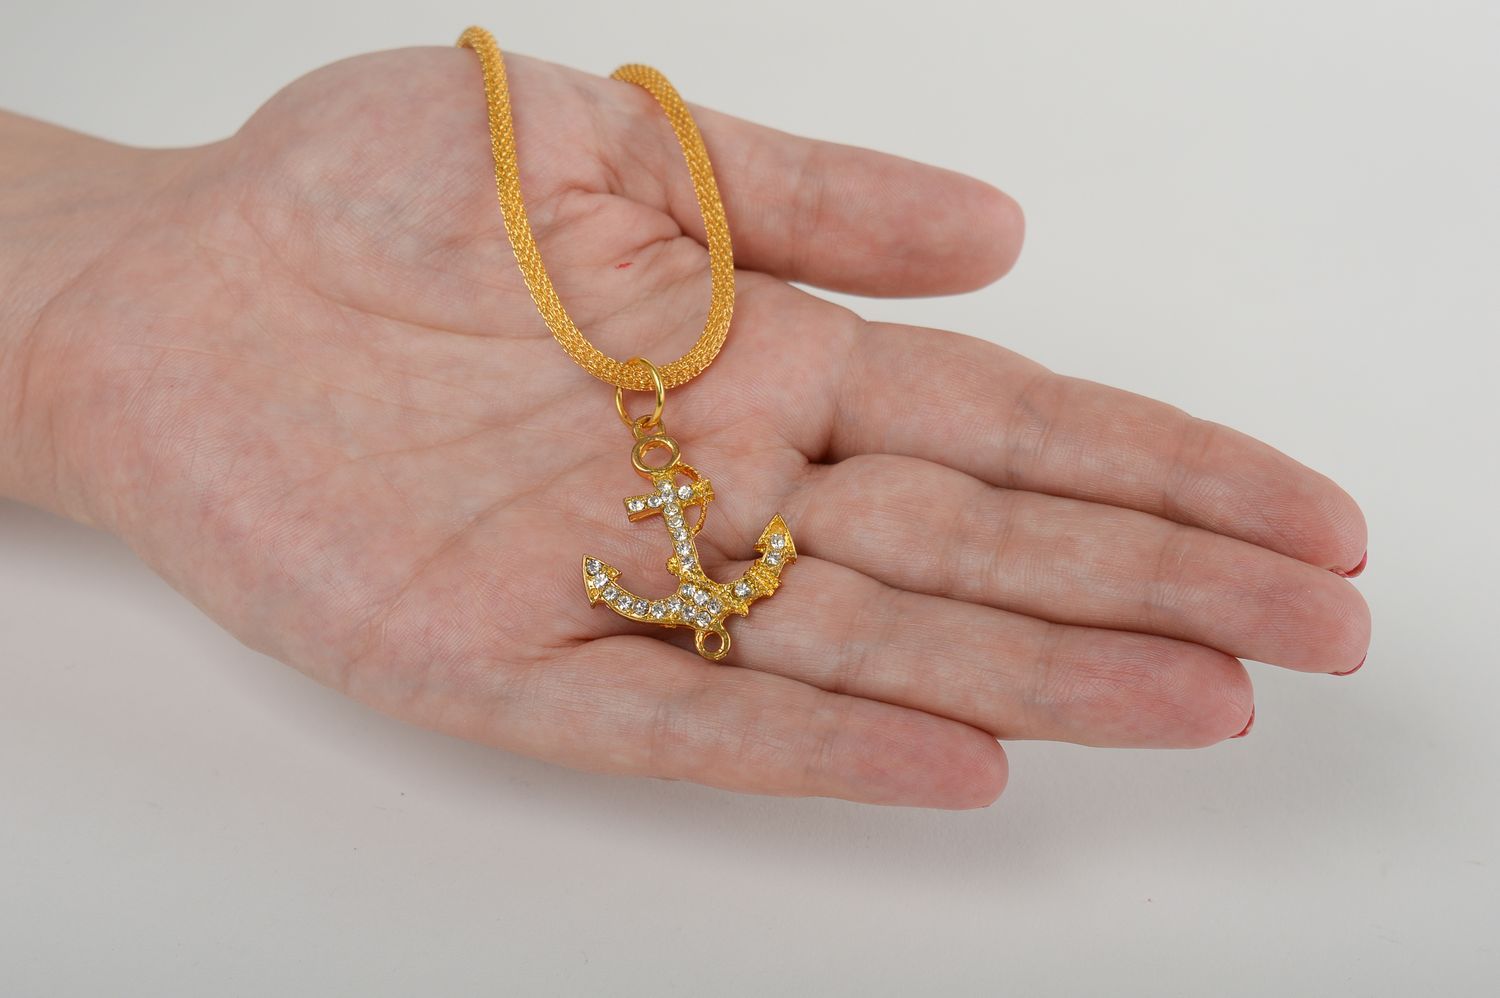 Beautiful pendant handmade metal pendant anchor pendant metal jewelry for girl photo 5